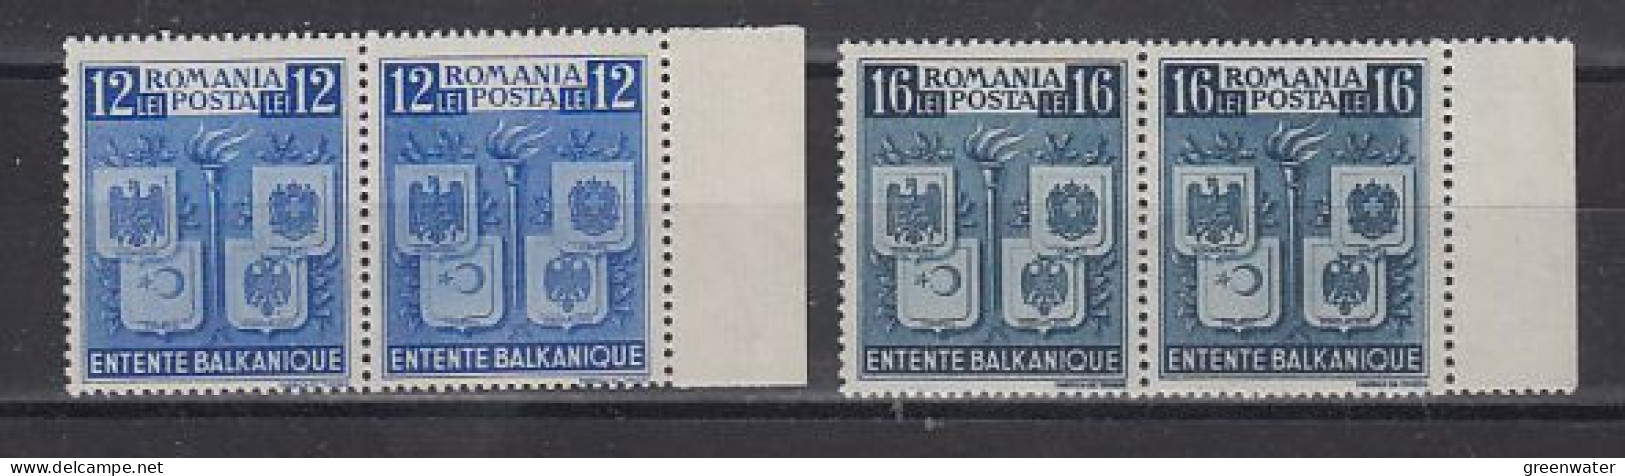 Romania 1940 Petite Entente 2v (pair) ** Mnh (59753) - Europäischer Gedanke